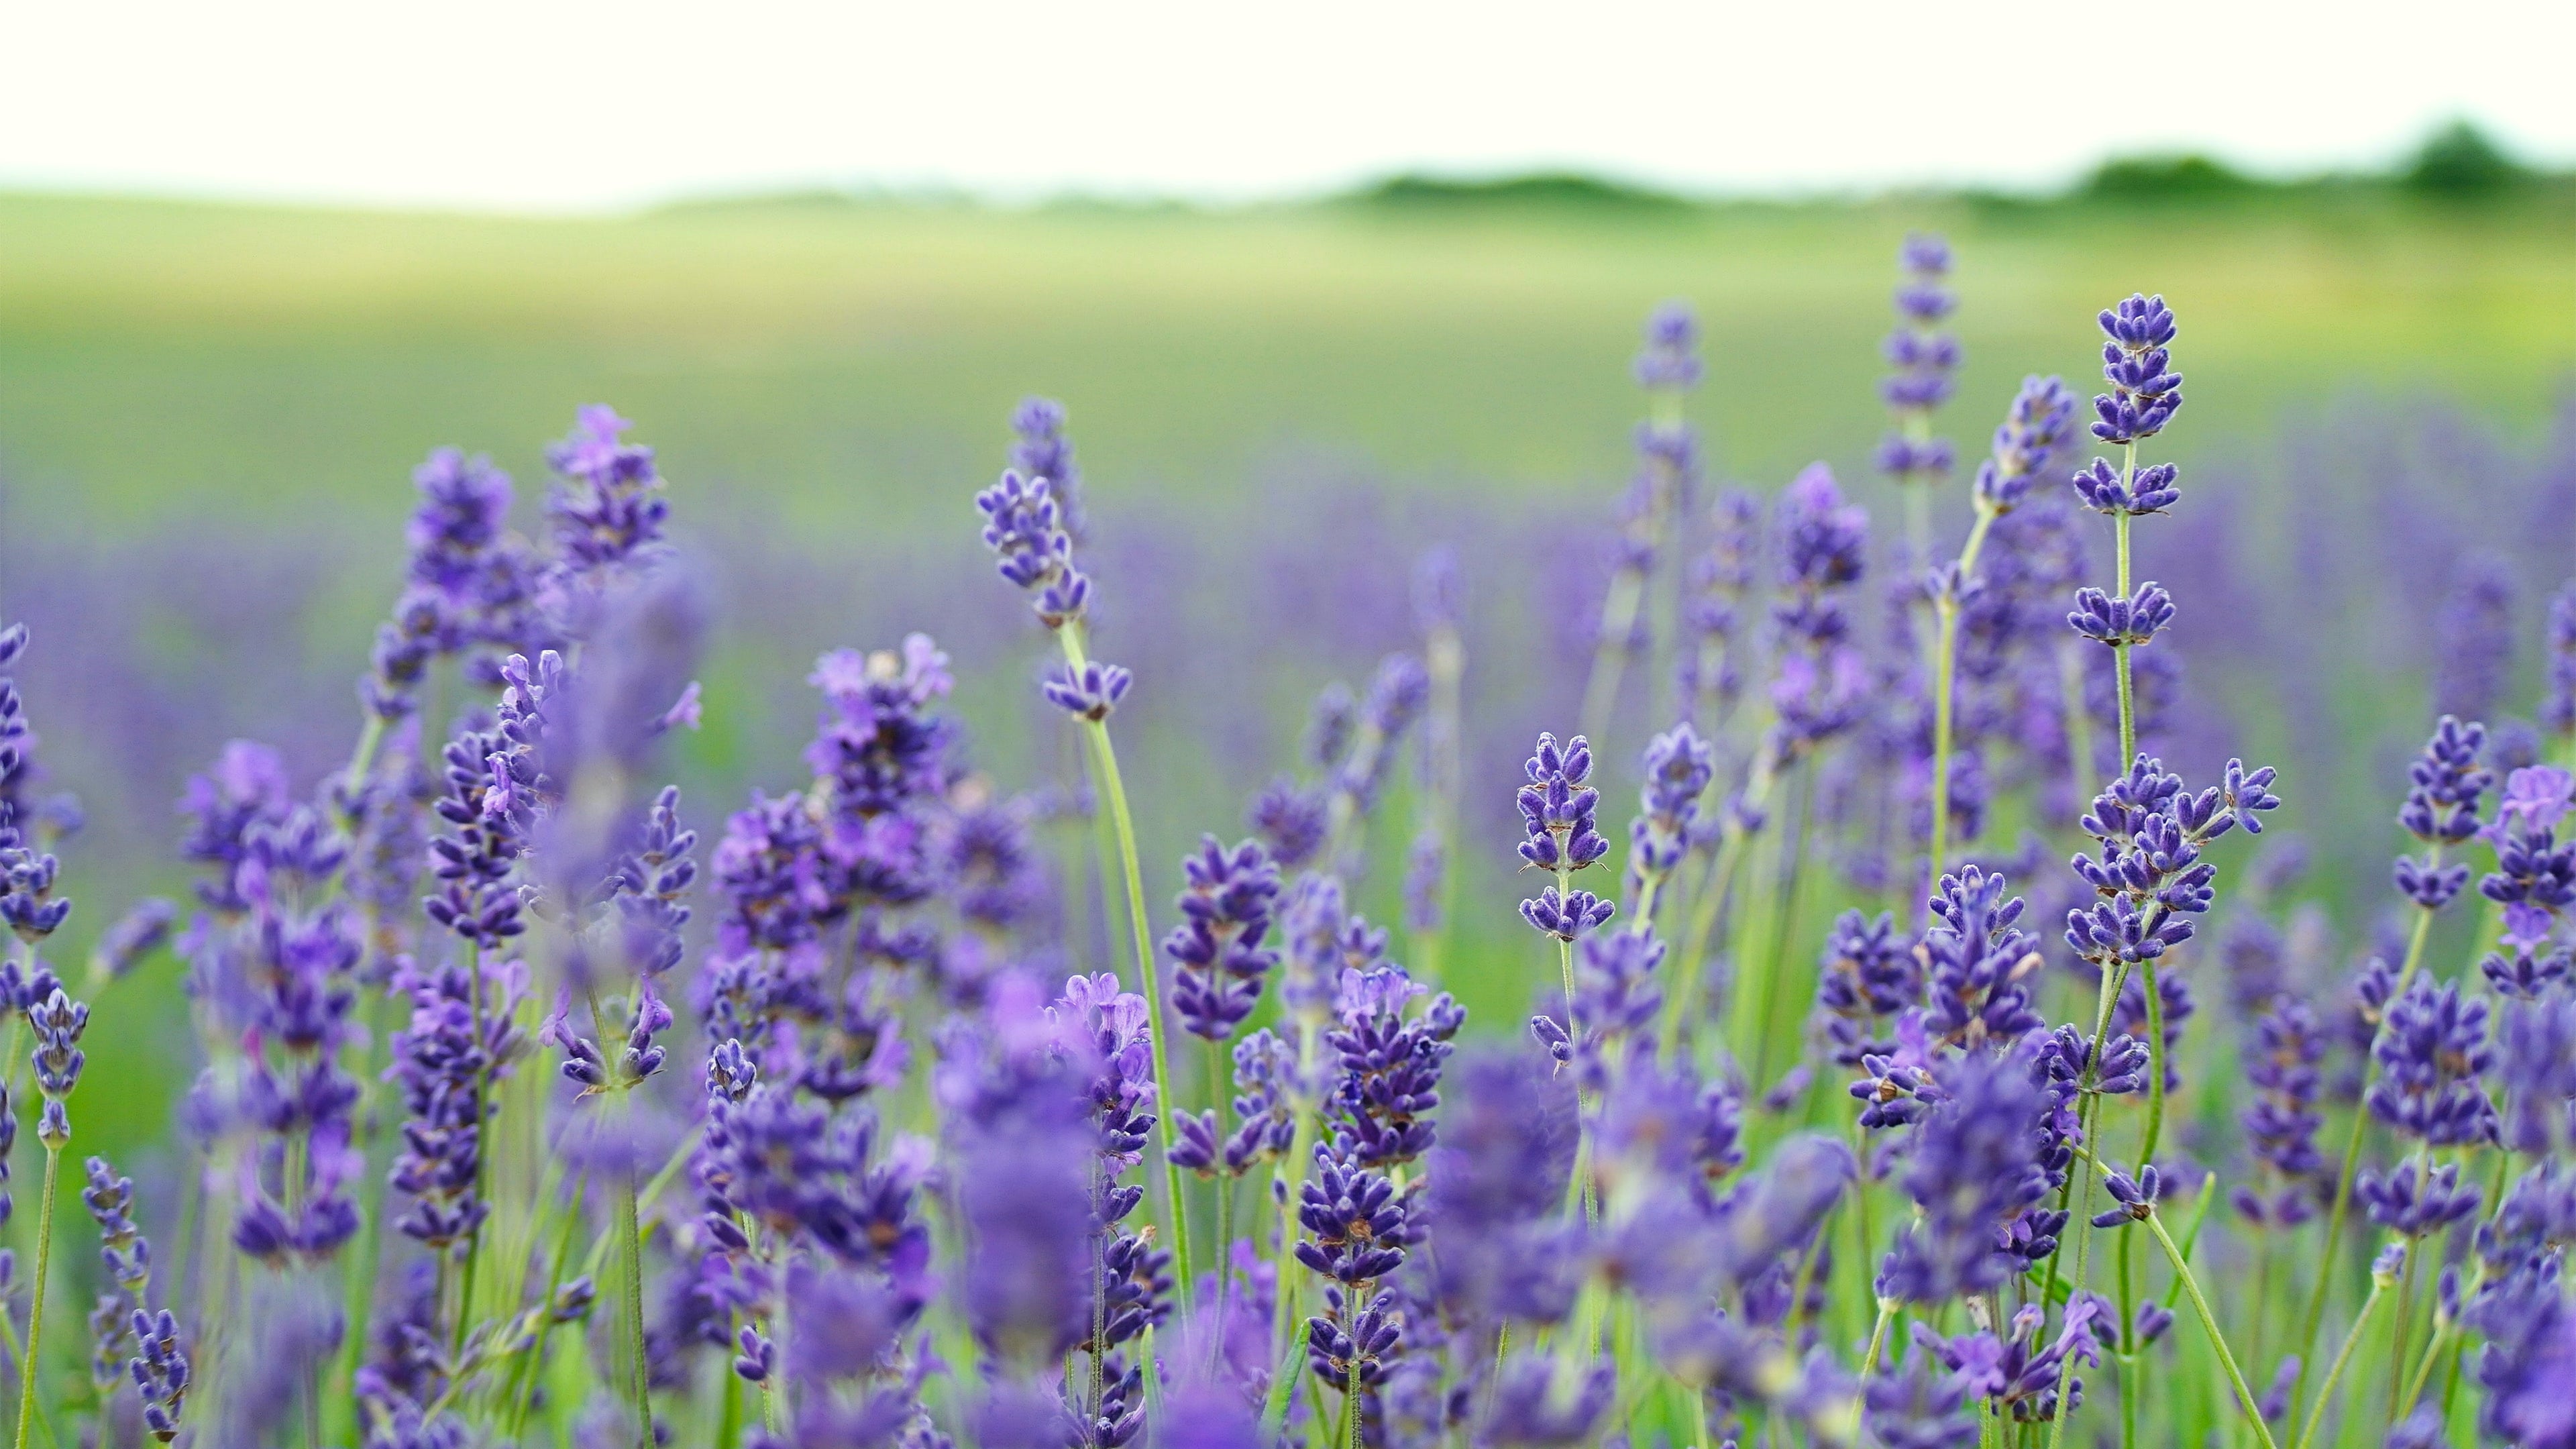 Shot of a grassy field of lavender. Photo by Annie Spratt - Unsplash